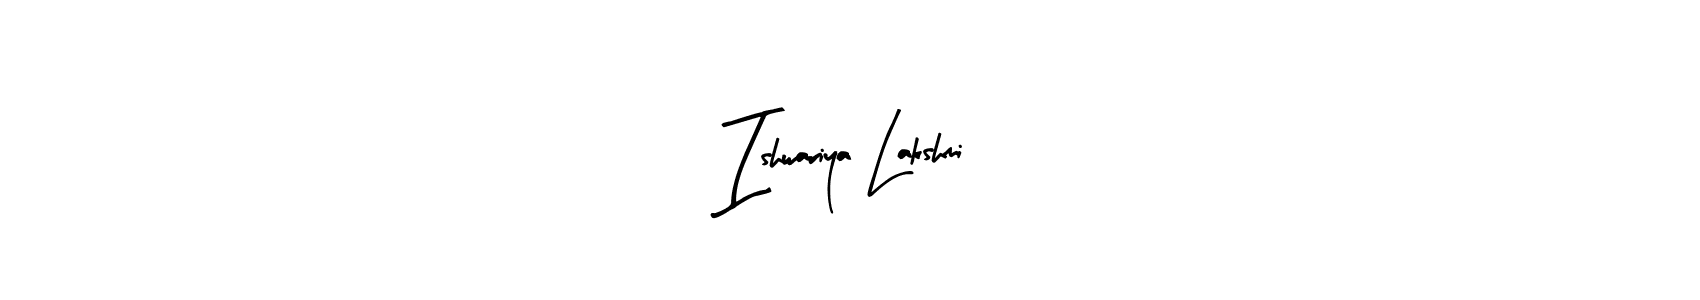 How to make Ishwariya Lakshmi signature? Arty Signature is a professional autograph style. Create handwritten signature for Ishwariya Lakshmi name. Ishwariya Lakshmi signature style 8 images and pictures png